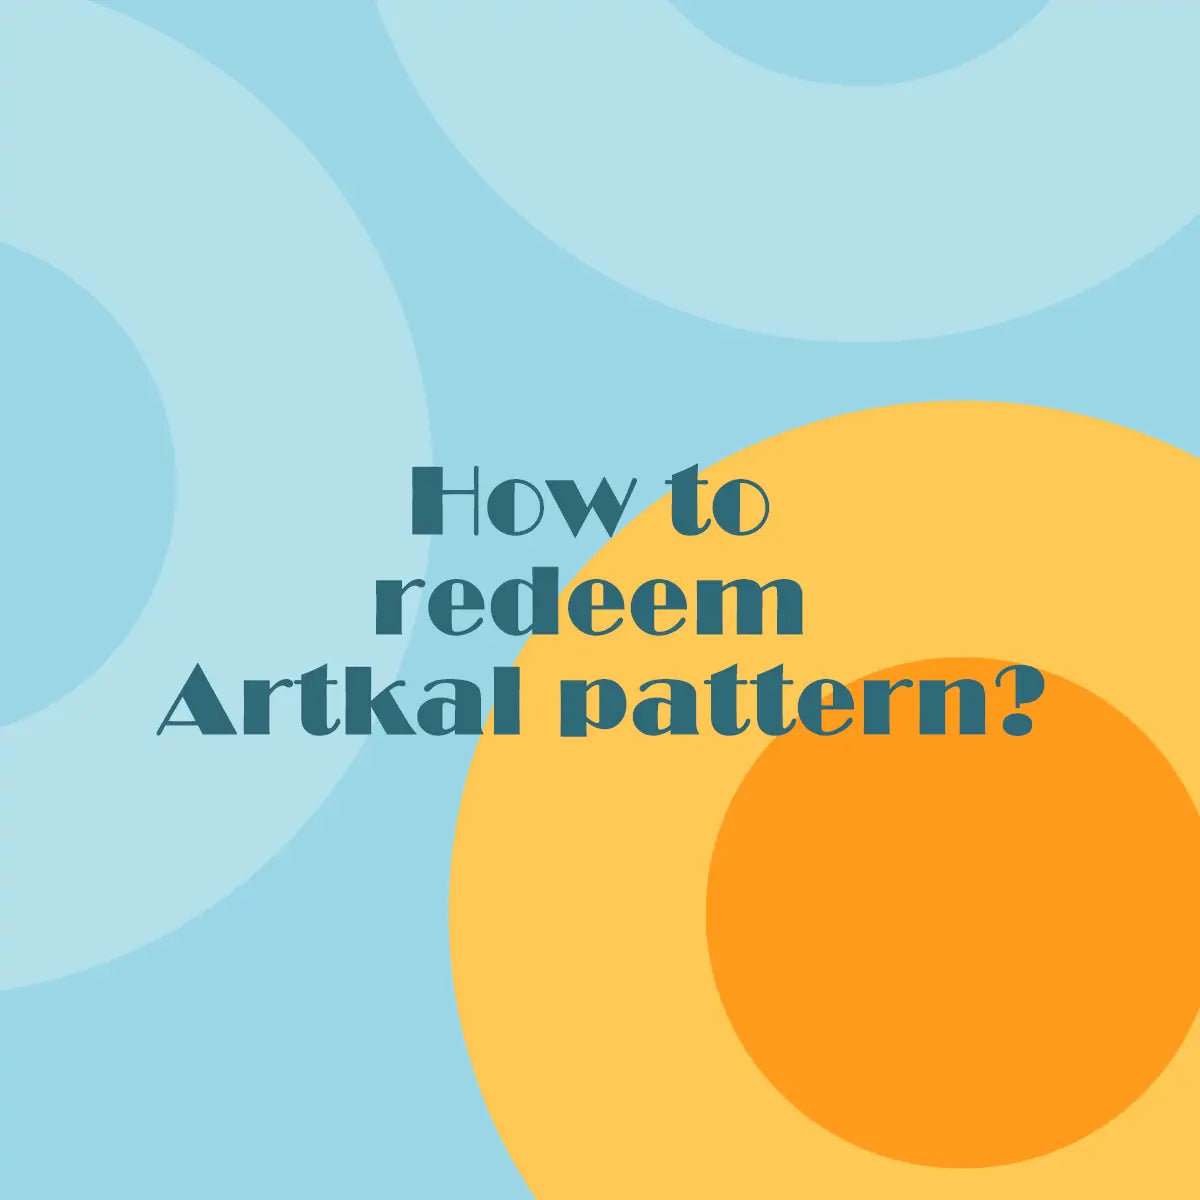 how to redeem artkal patterns